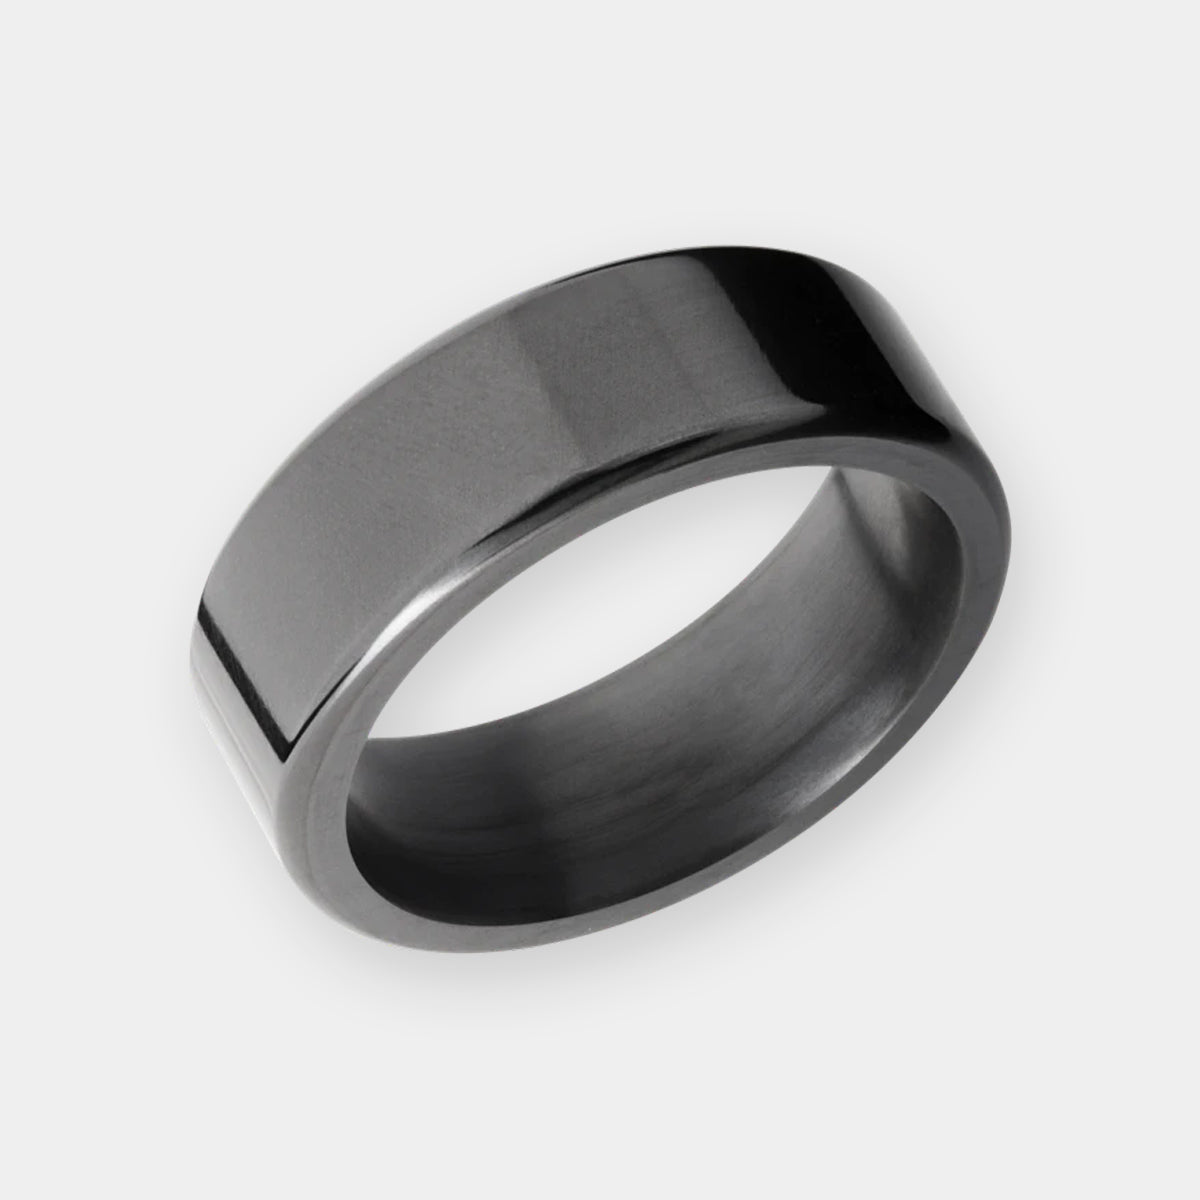 Elysium Black Diamond: Kratos 8mm Ring - Rounded Edge - Solid Black Diamond | Wedding Rings For Men | Crushed Diamond Dust | Men's Black Wedding Band